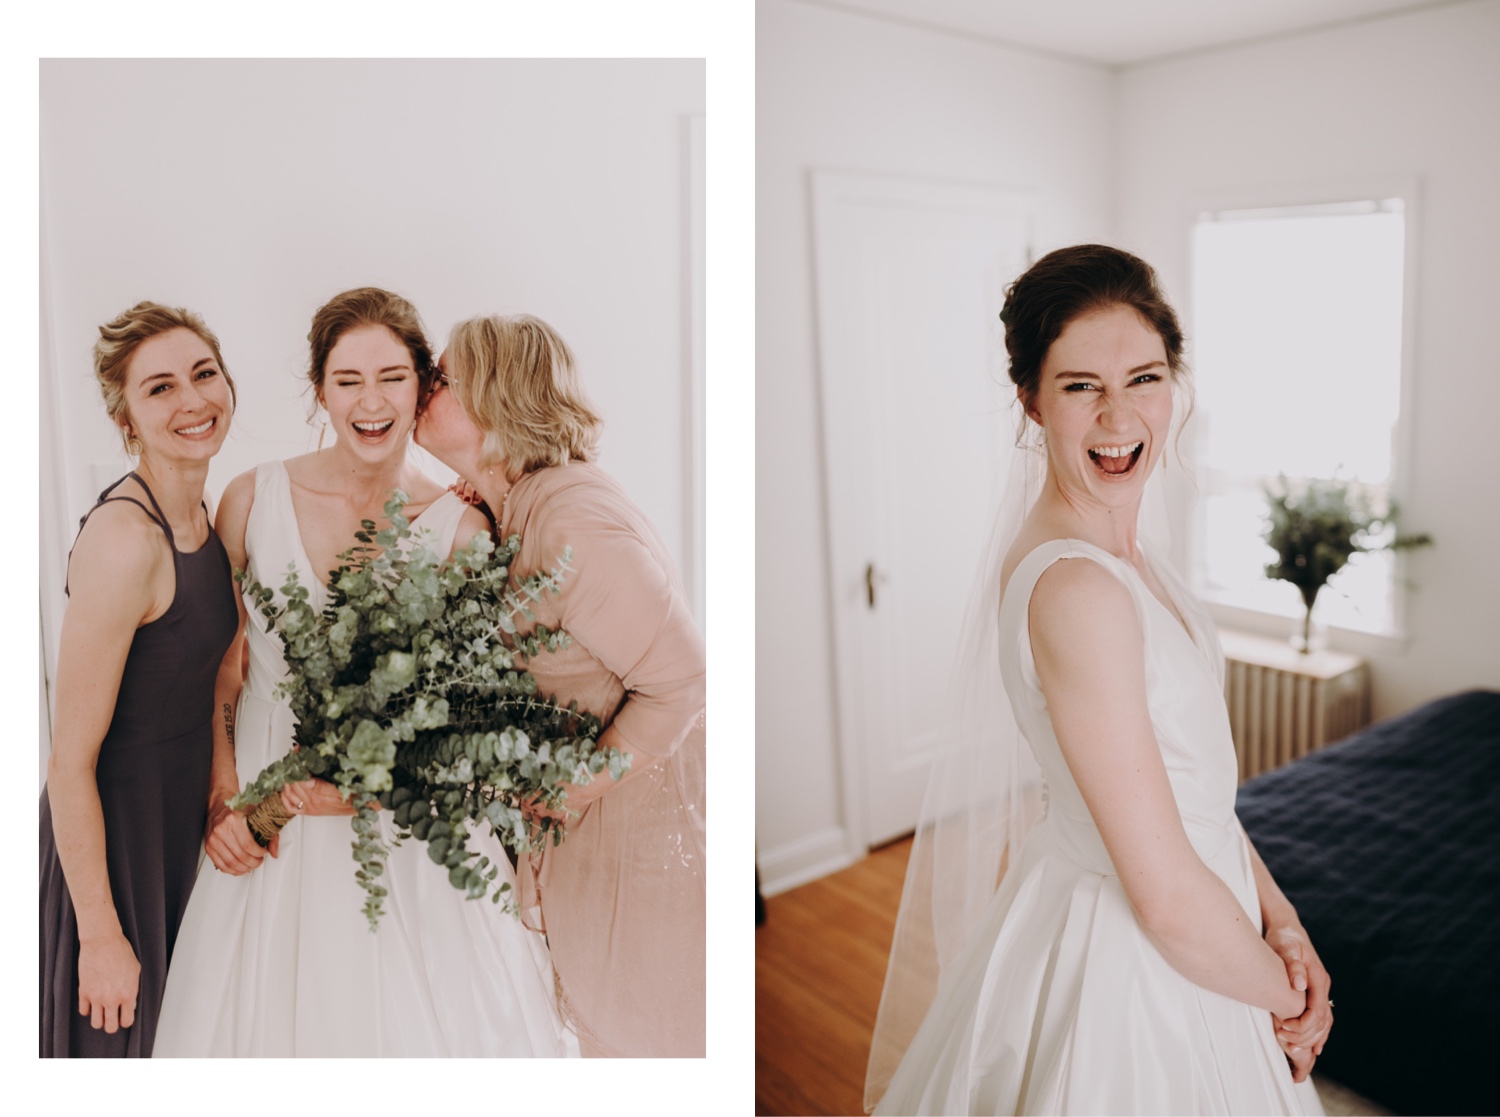 putting on the brides wedding dress. Minneapolis minnesota wedding photographer. 